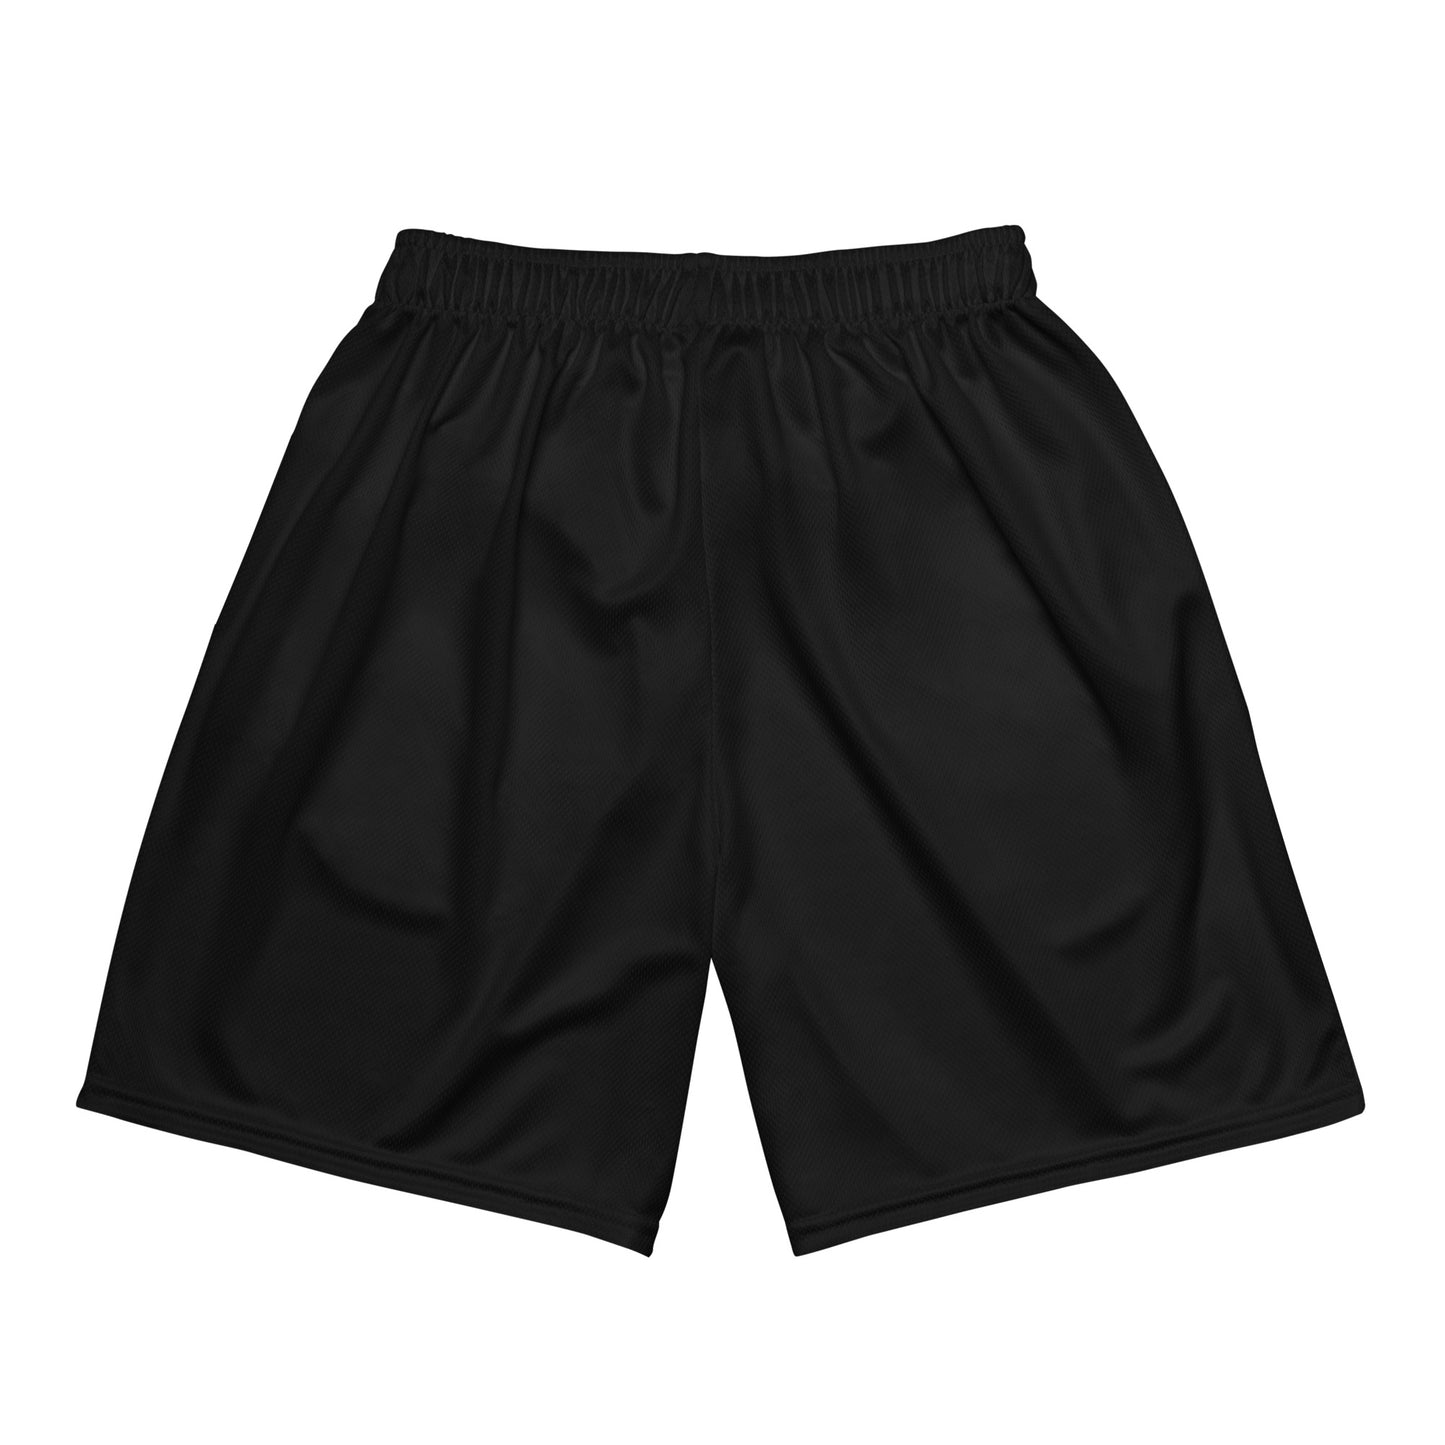 Unisex Black  mesh shorts